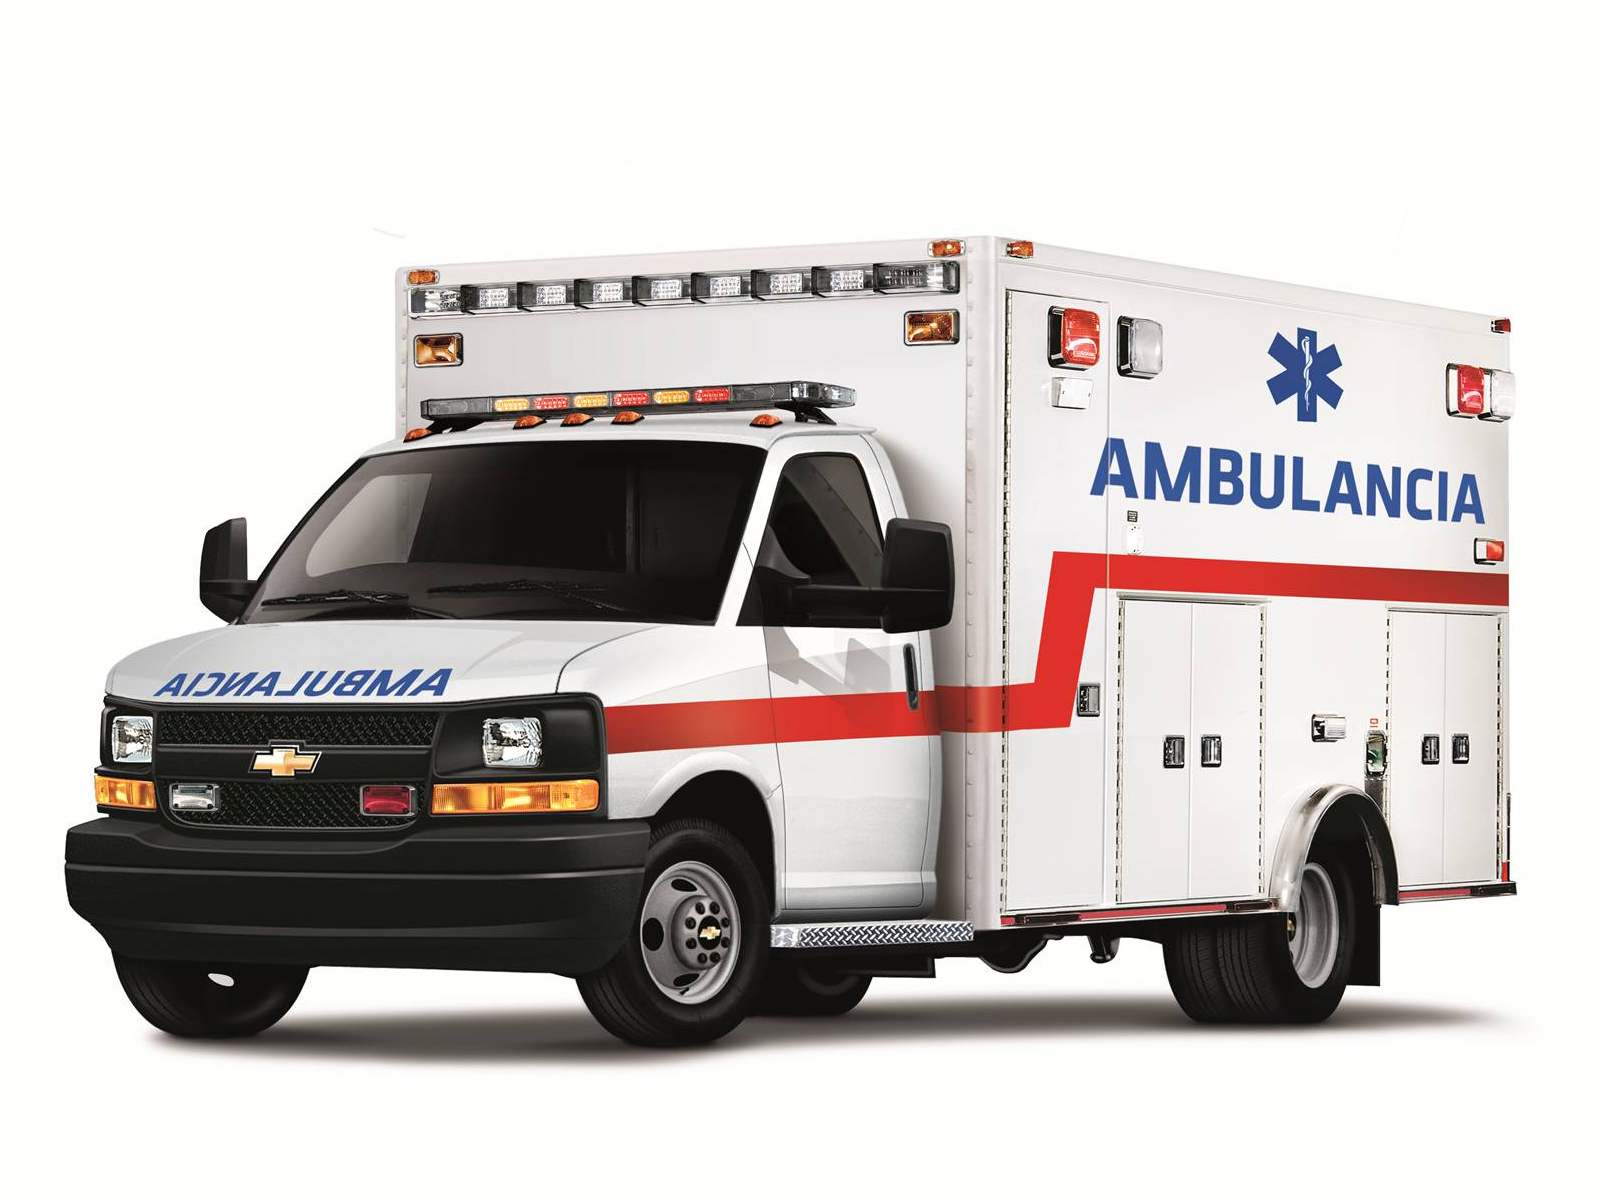 ambulance wallpaper,land vehicle,vehicle,car,emergency vehicle,ambulance